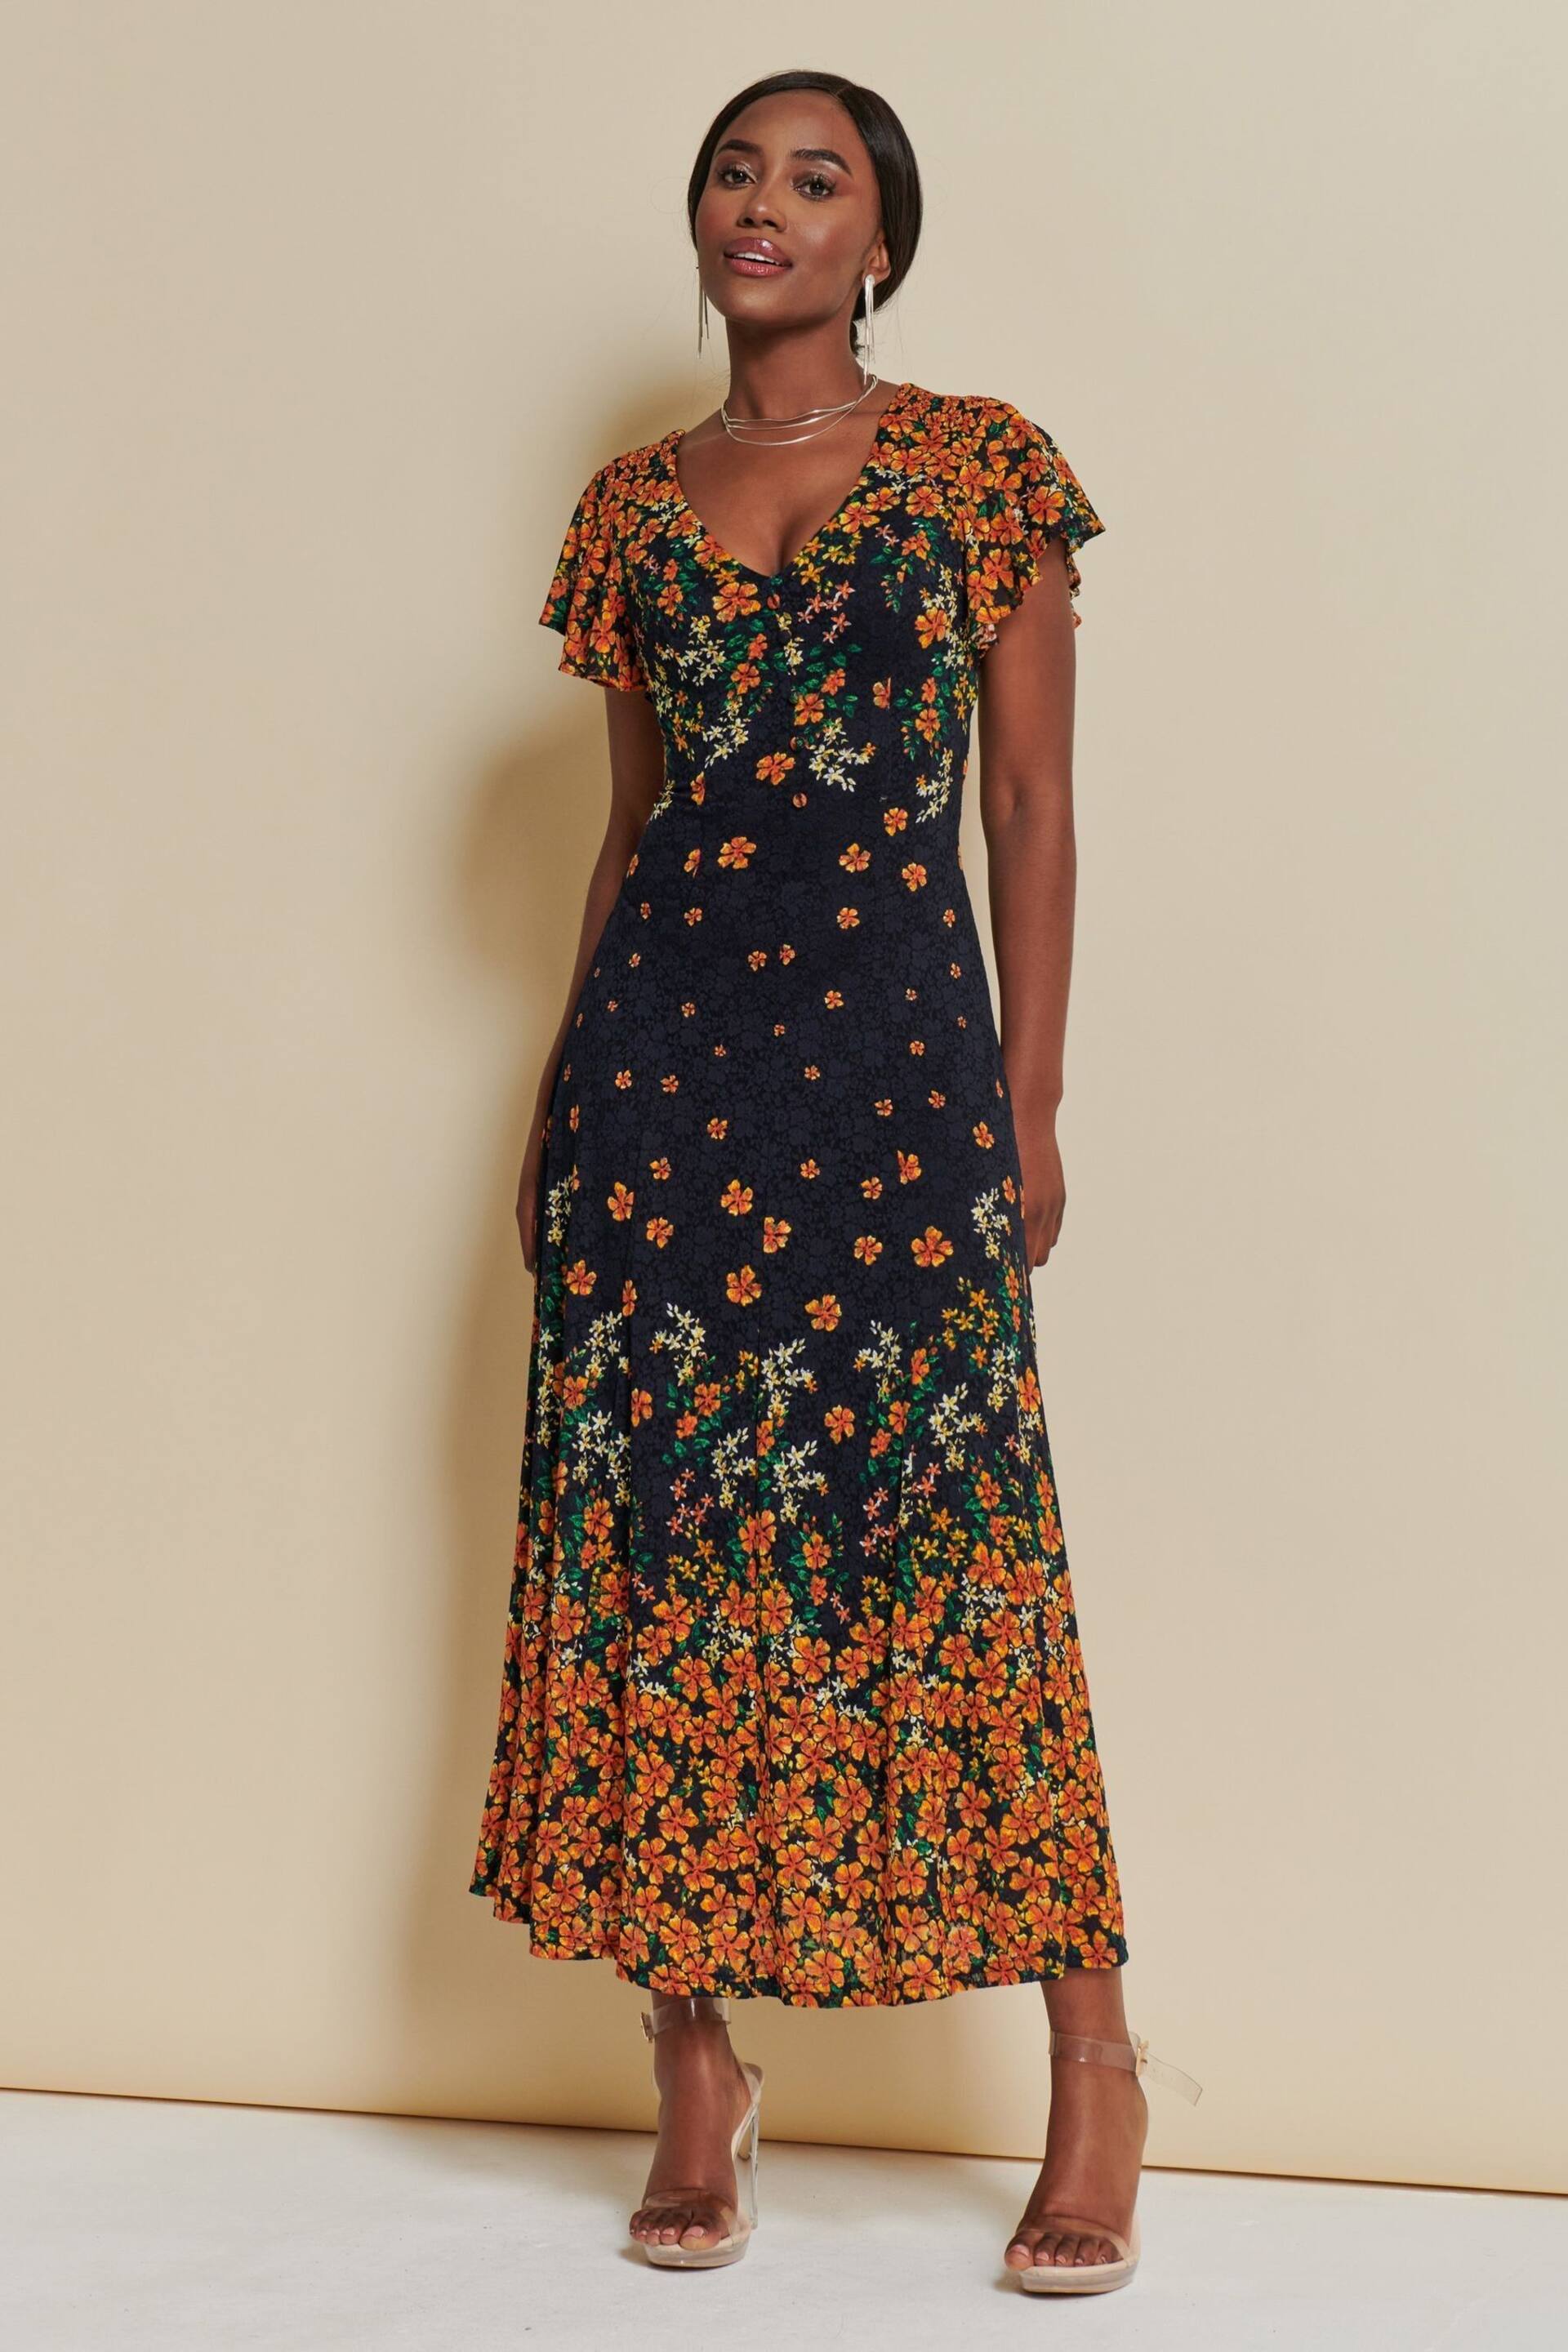 Jolie Moi Orange Lace Floral Print Fit & Flare Maxi Dress - Image 3 of 7